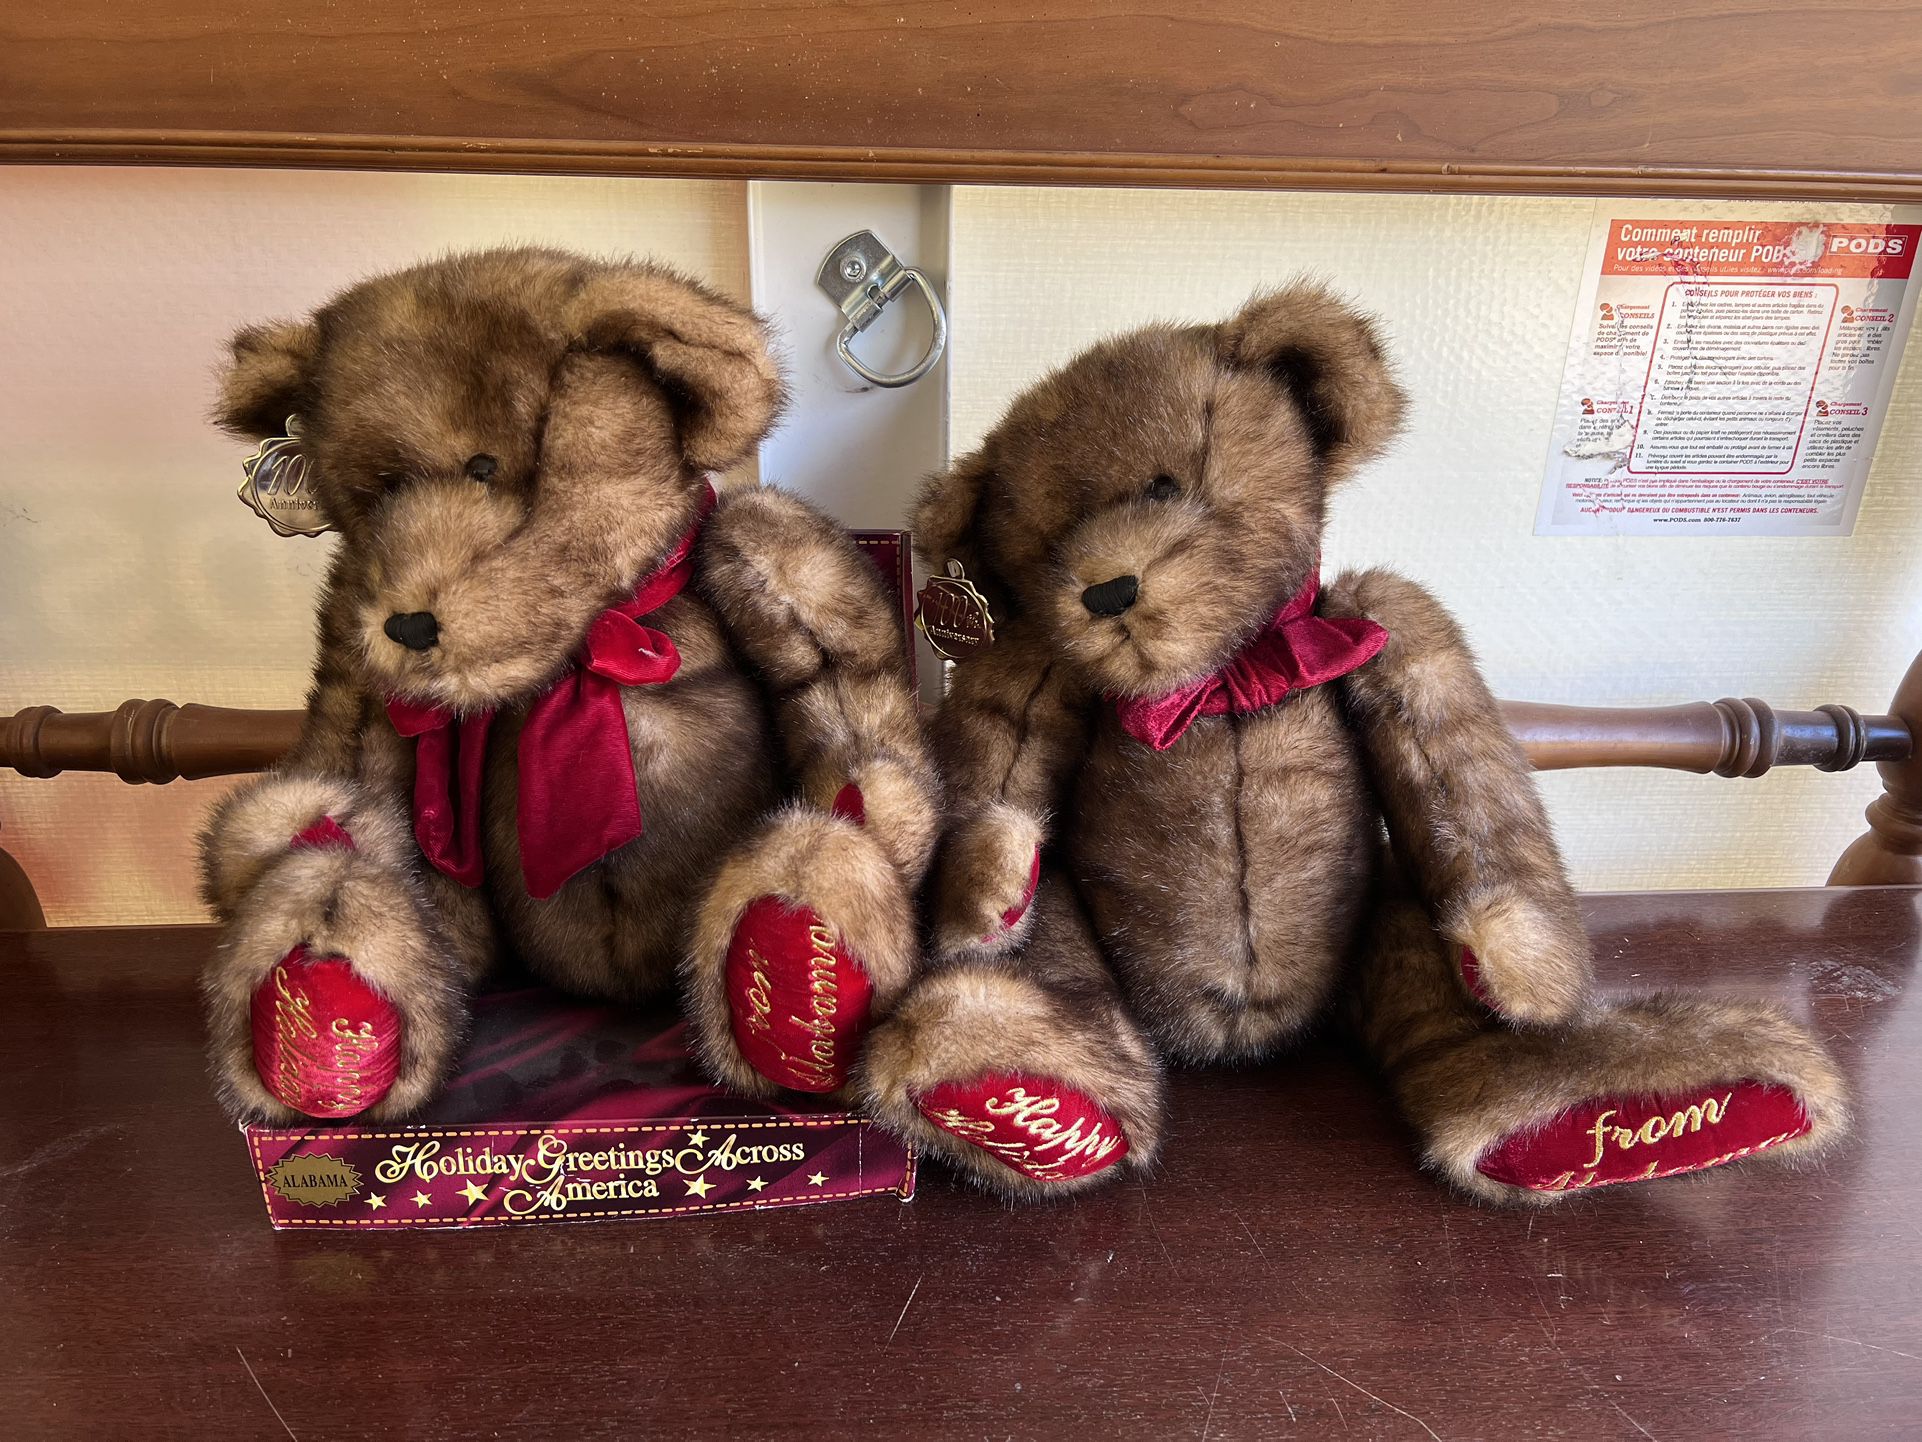 Pair of Vintage DanDee Plush Bears 100th Anniversary Holiday Greetings Across America “Alabama” - REDUCED